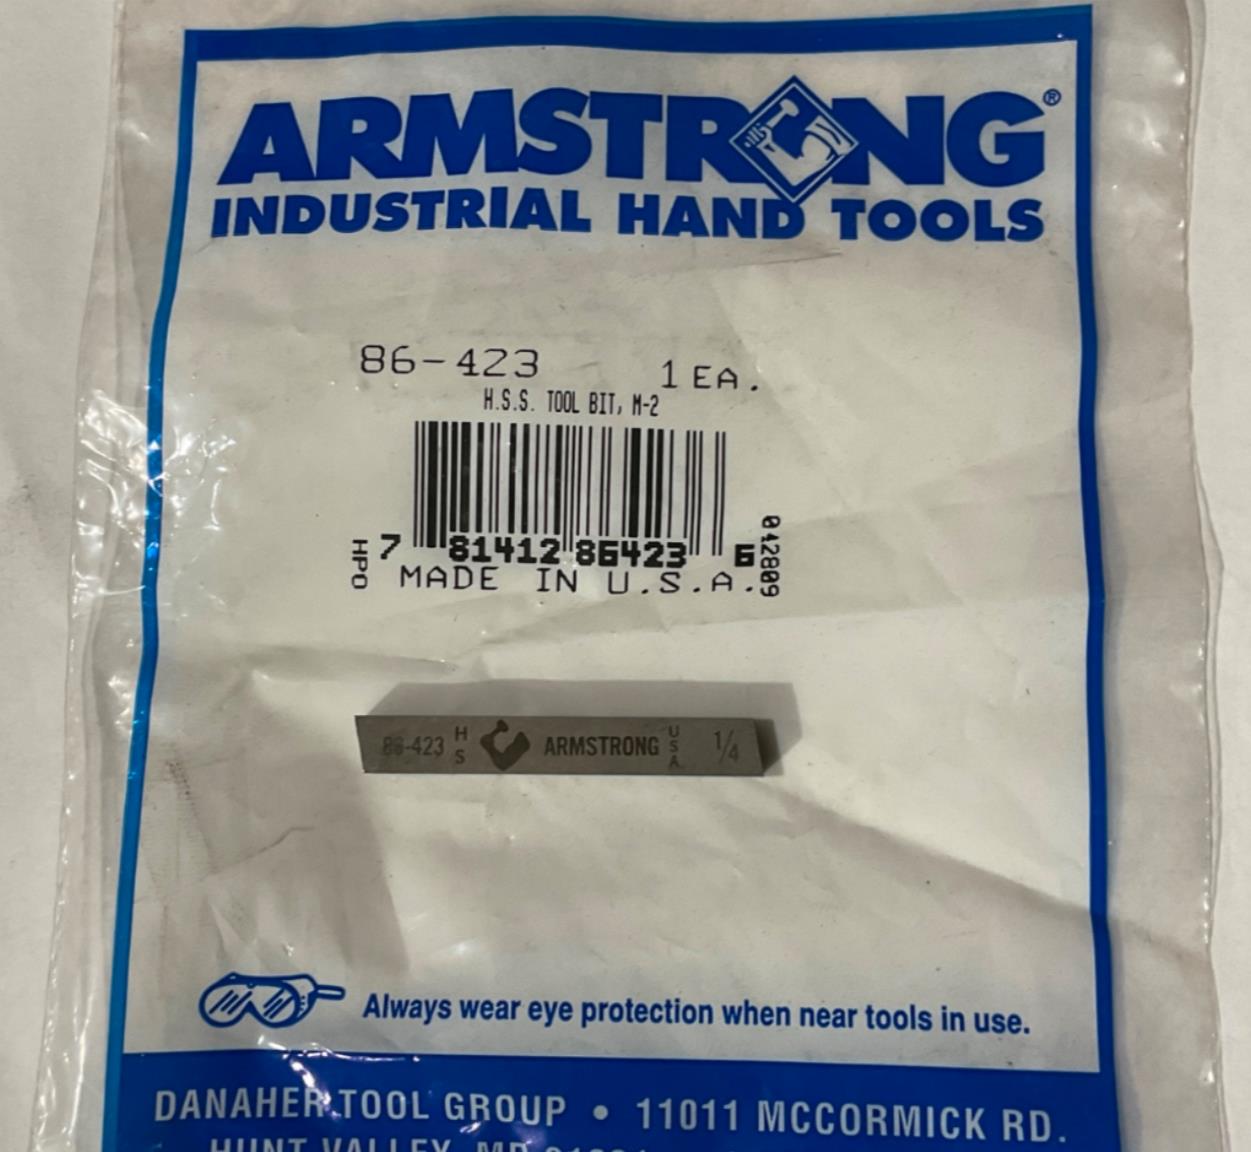 Armstrong 86-423 1/4 H.S.S. Tool Bit M-2 USA